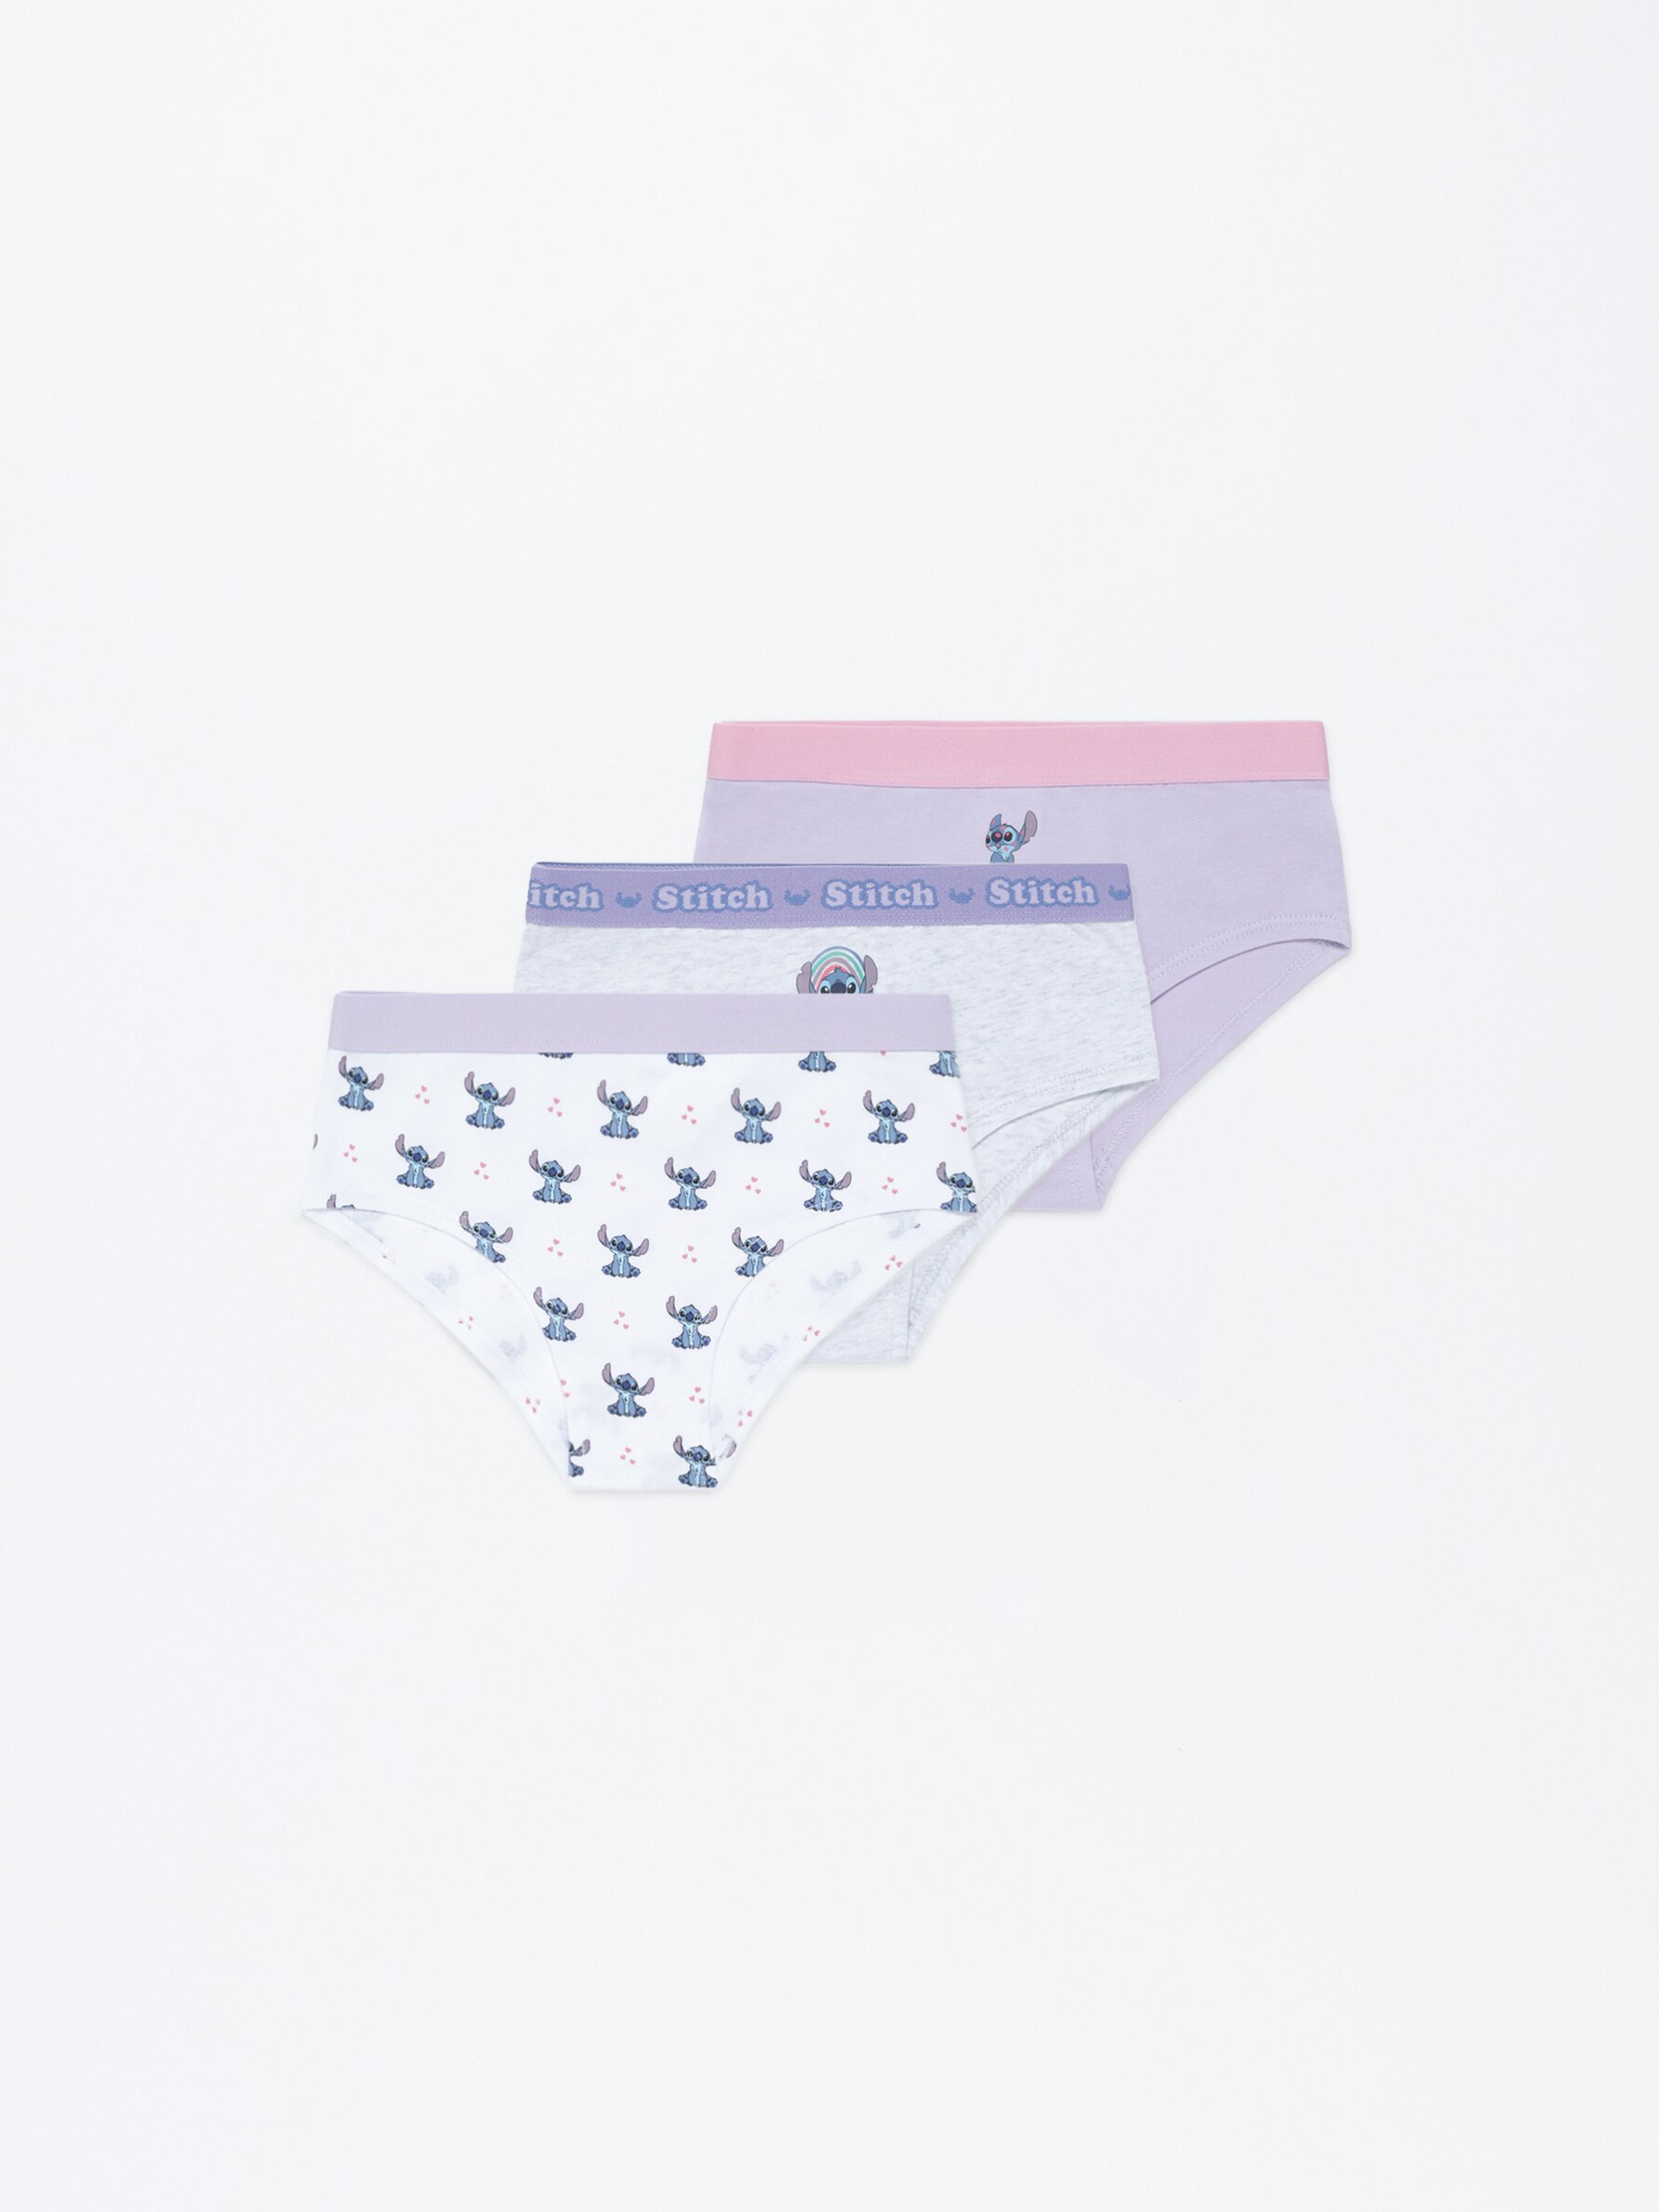 Pack of 3 Lilo & Stitch ©Disney hipster briefs - Underwear - CLOTHING -  Girl - Kids 